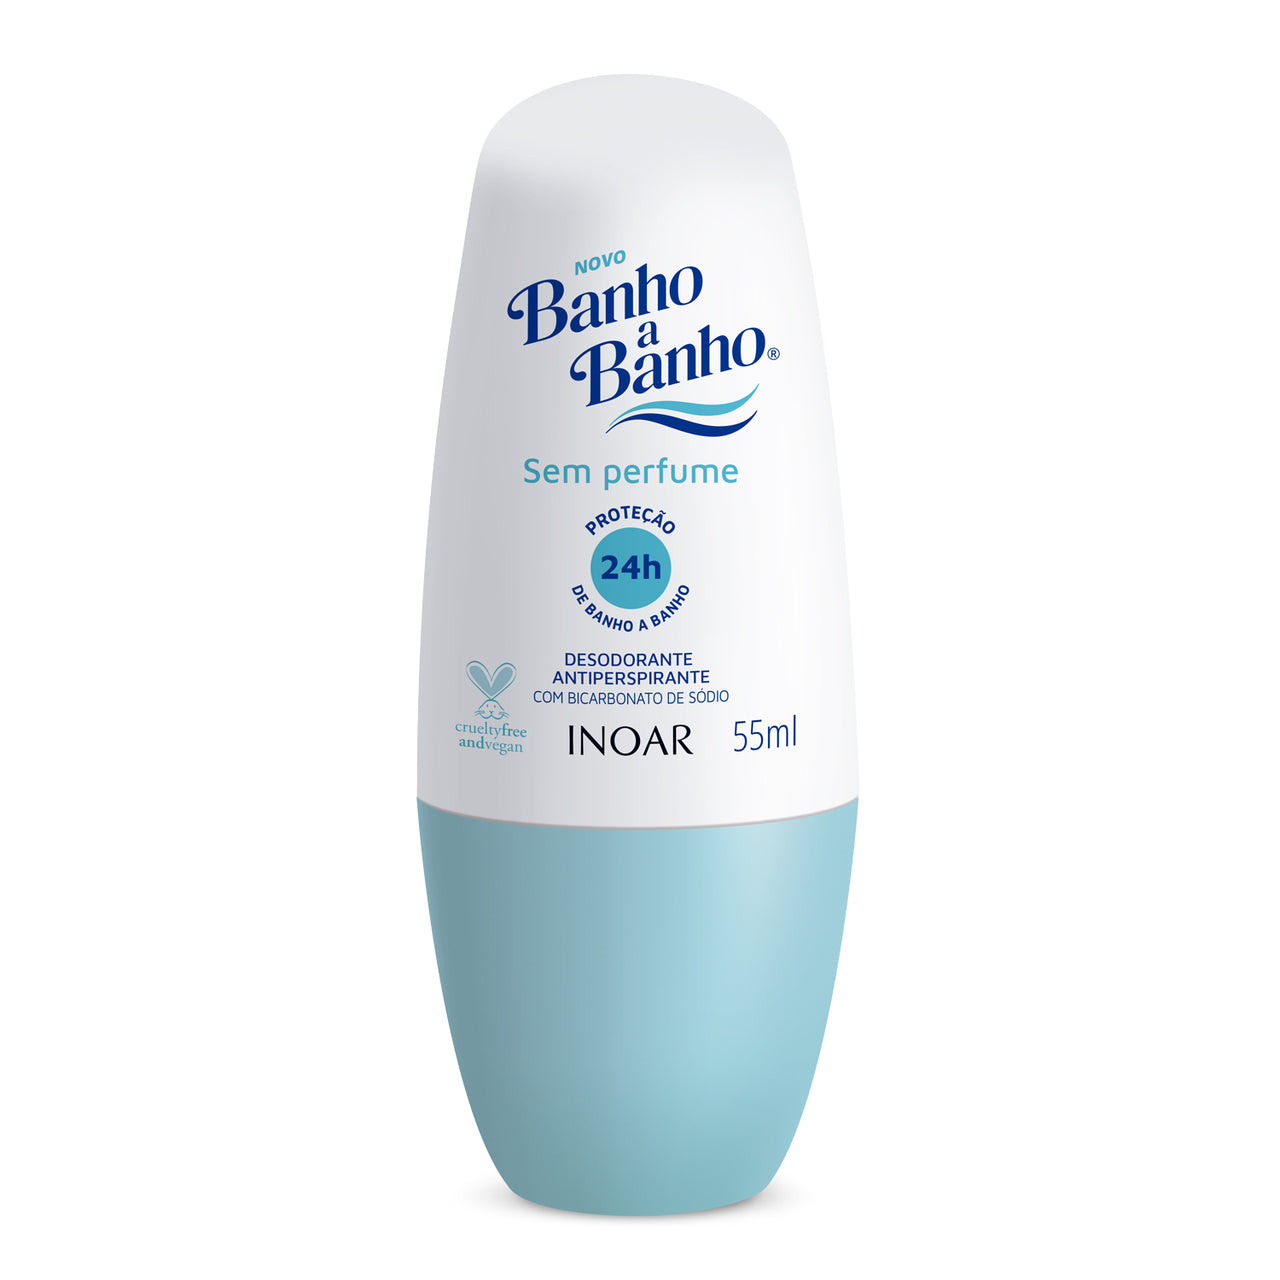 INOAR Banho a Banho Sem Perfume - bekvapis rutulinis dezodorantas 55 ml